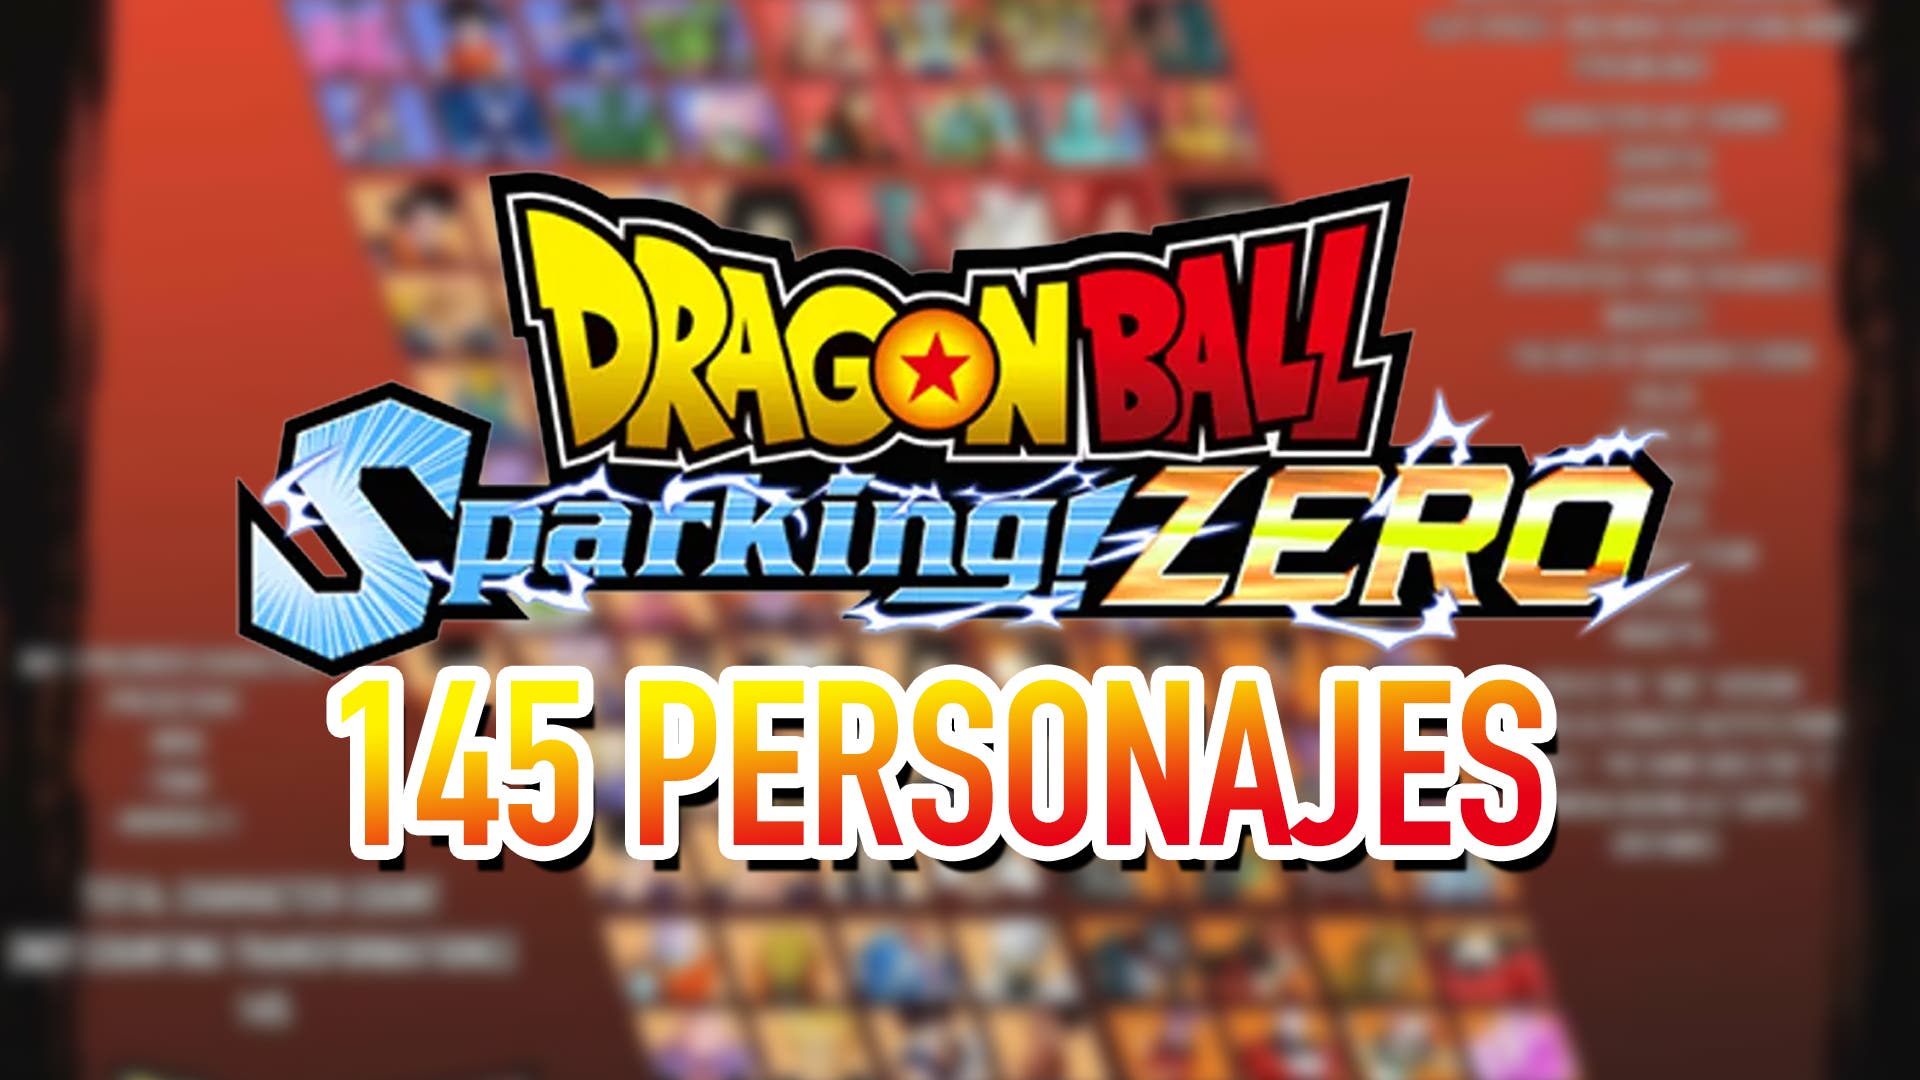 Dragon Ball: Sparking! Zero tendrá CASI 150 personajes, según esta